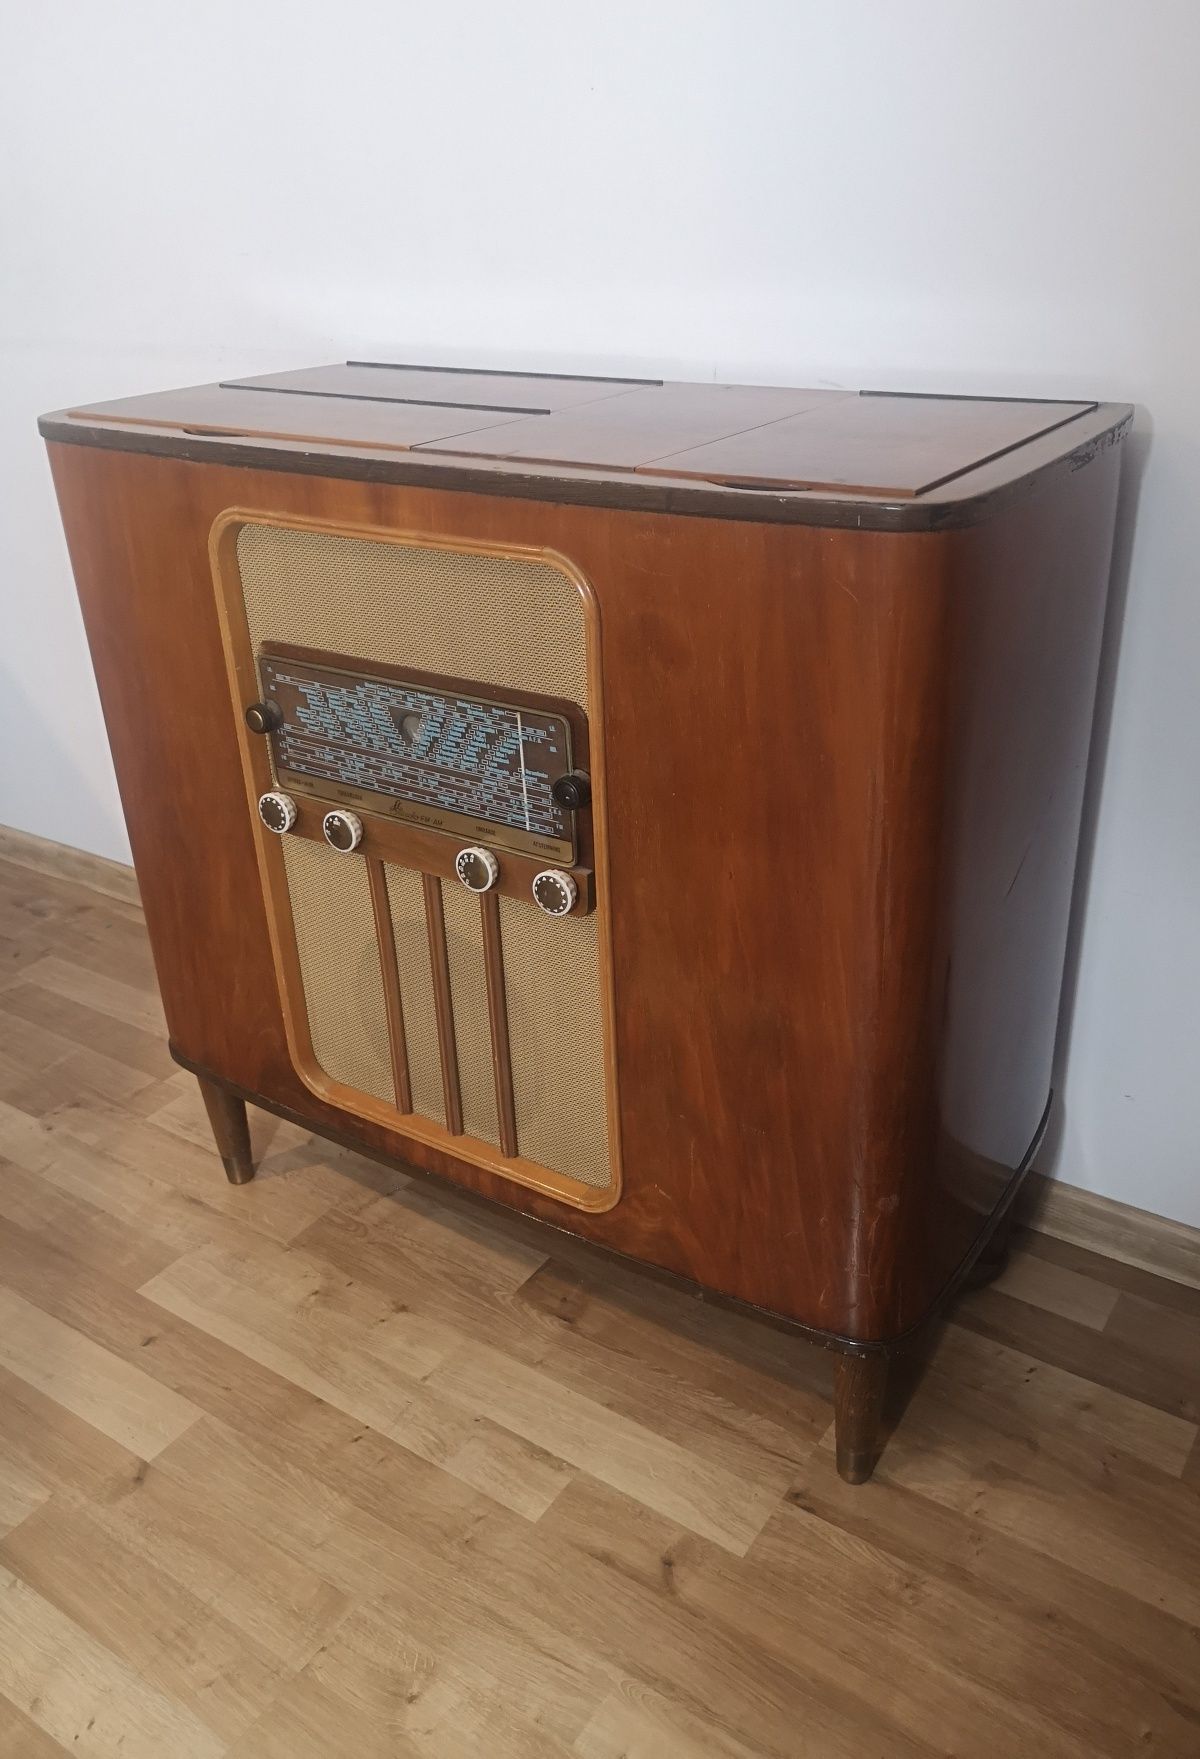 Szafka radioodbiornik retro, vintage